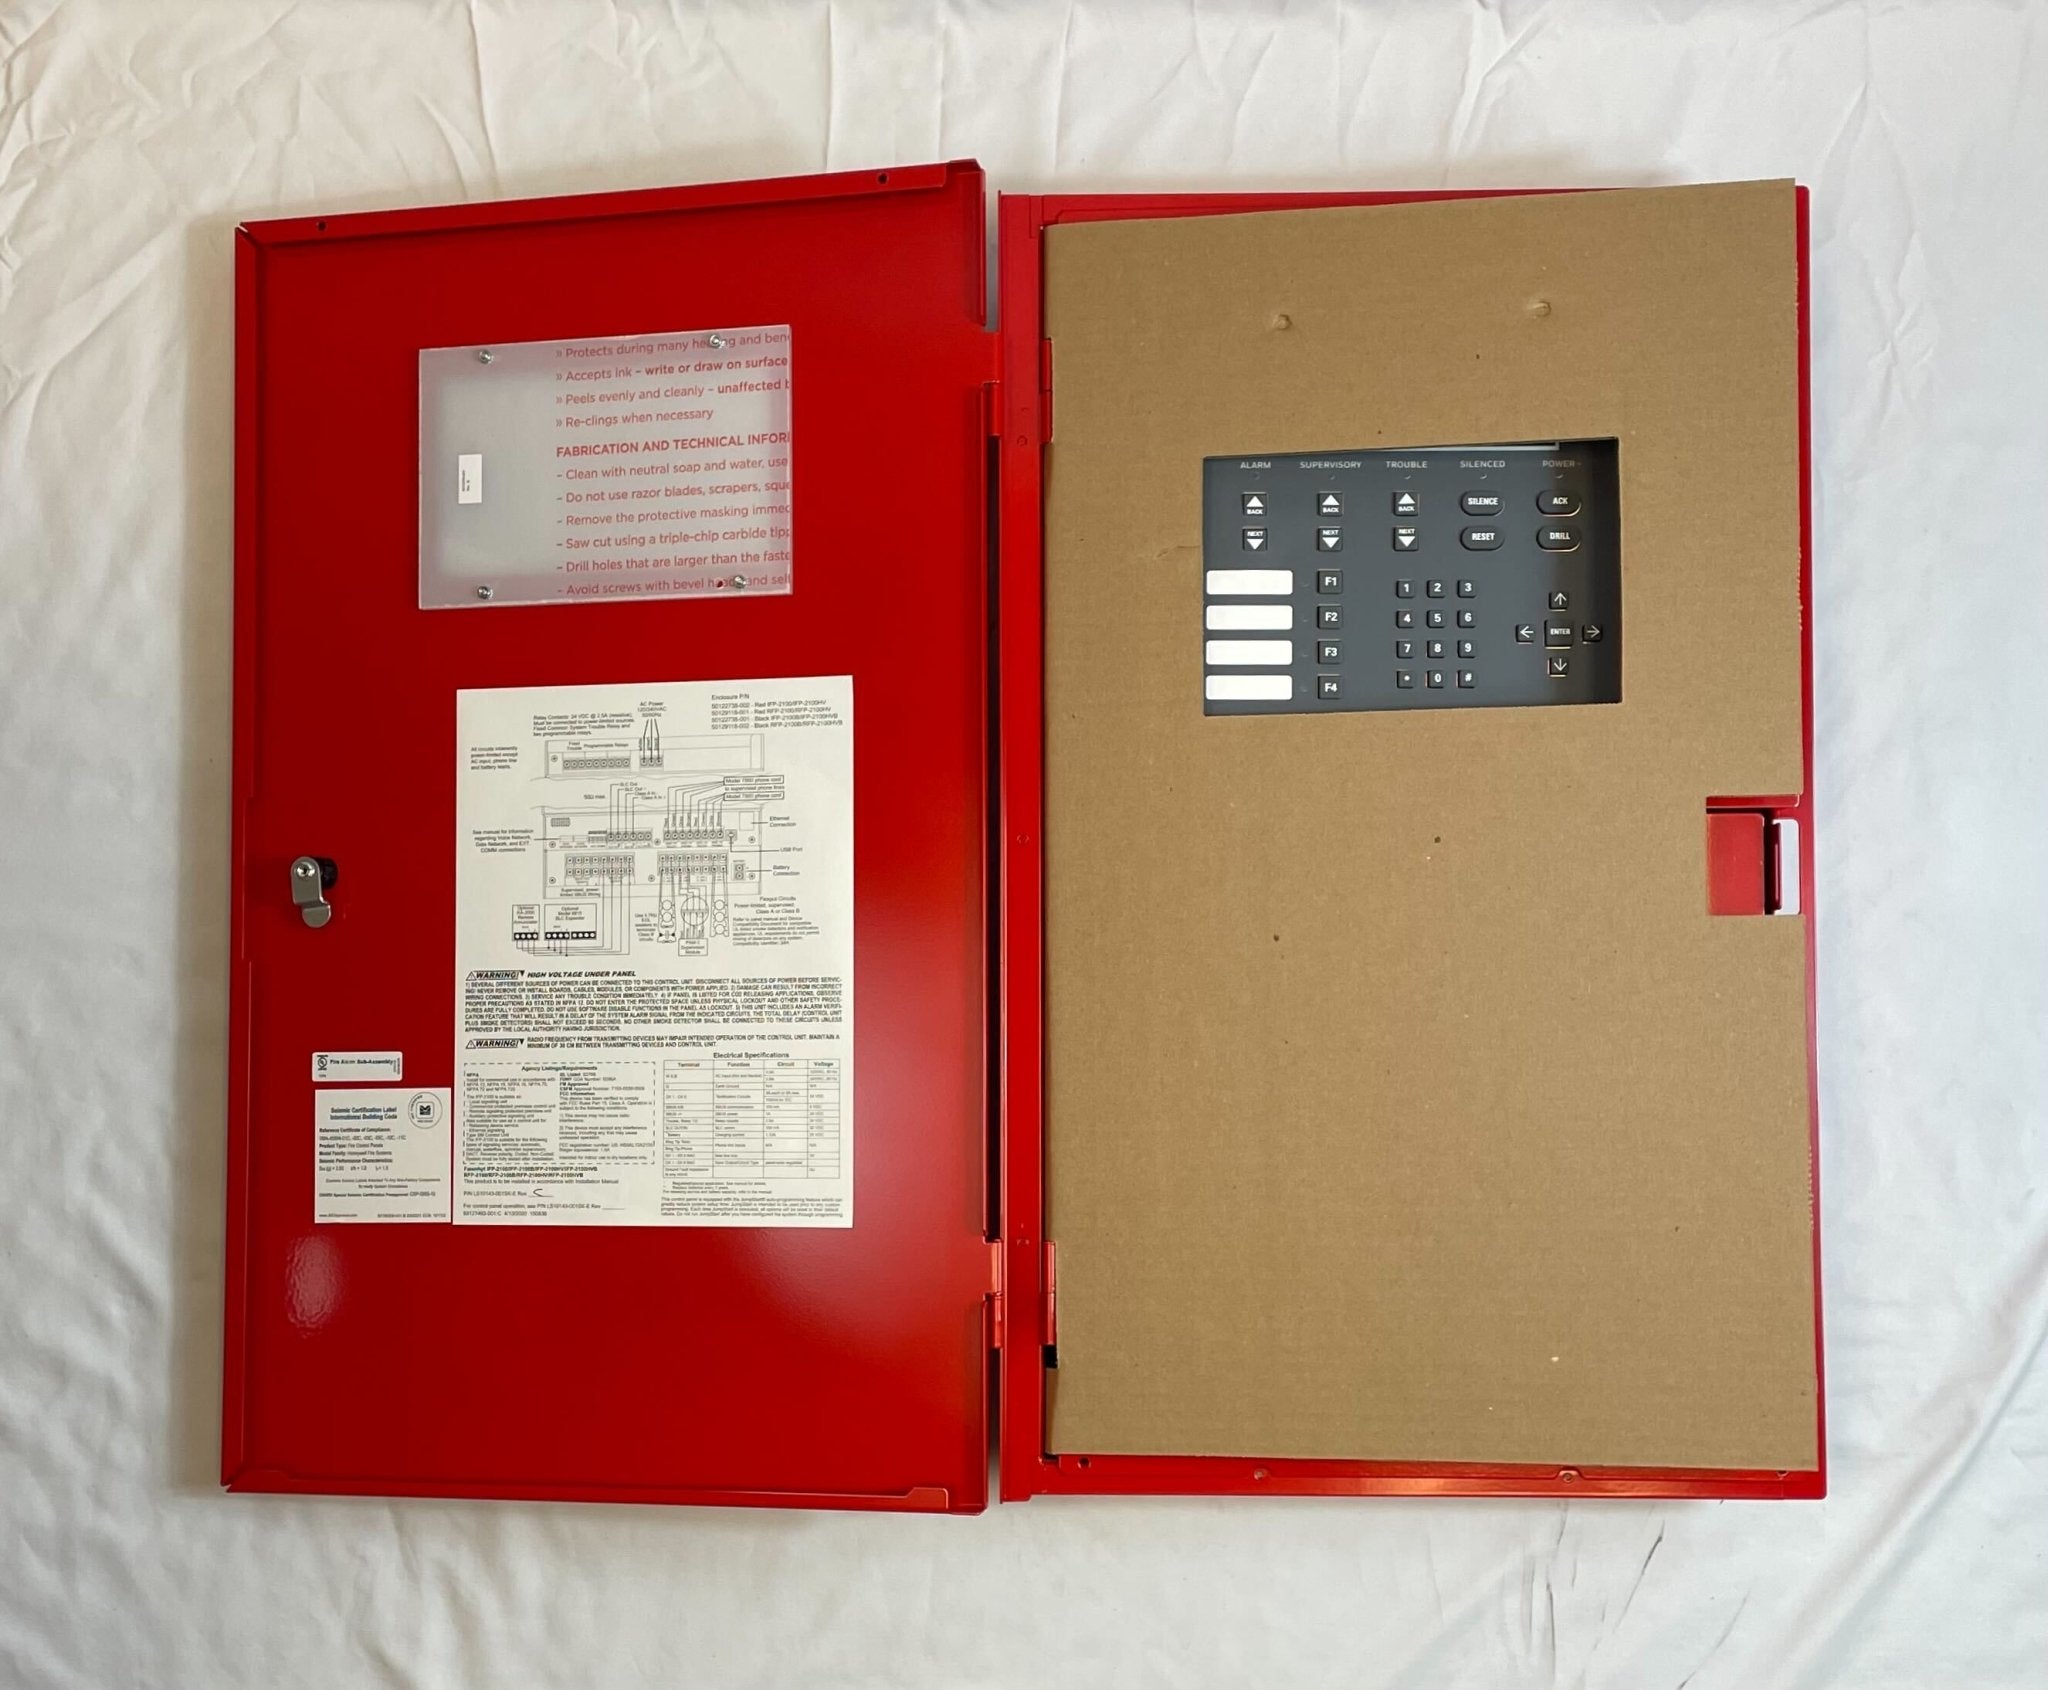 Farenhyt IFP-2100 - The Fire Alarm Supplier